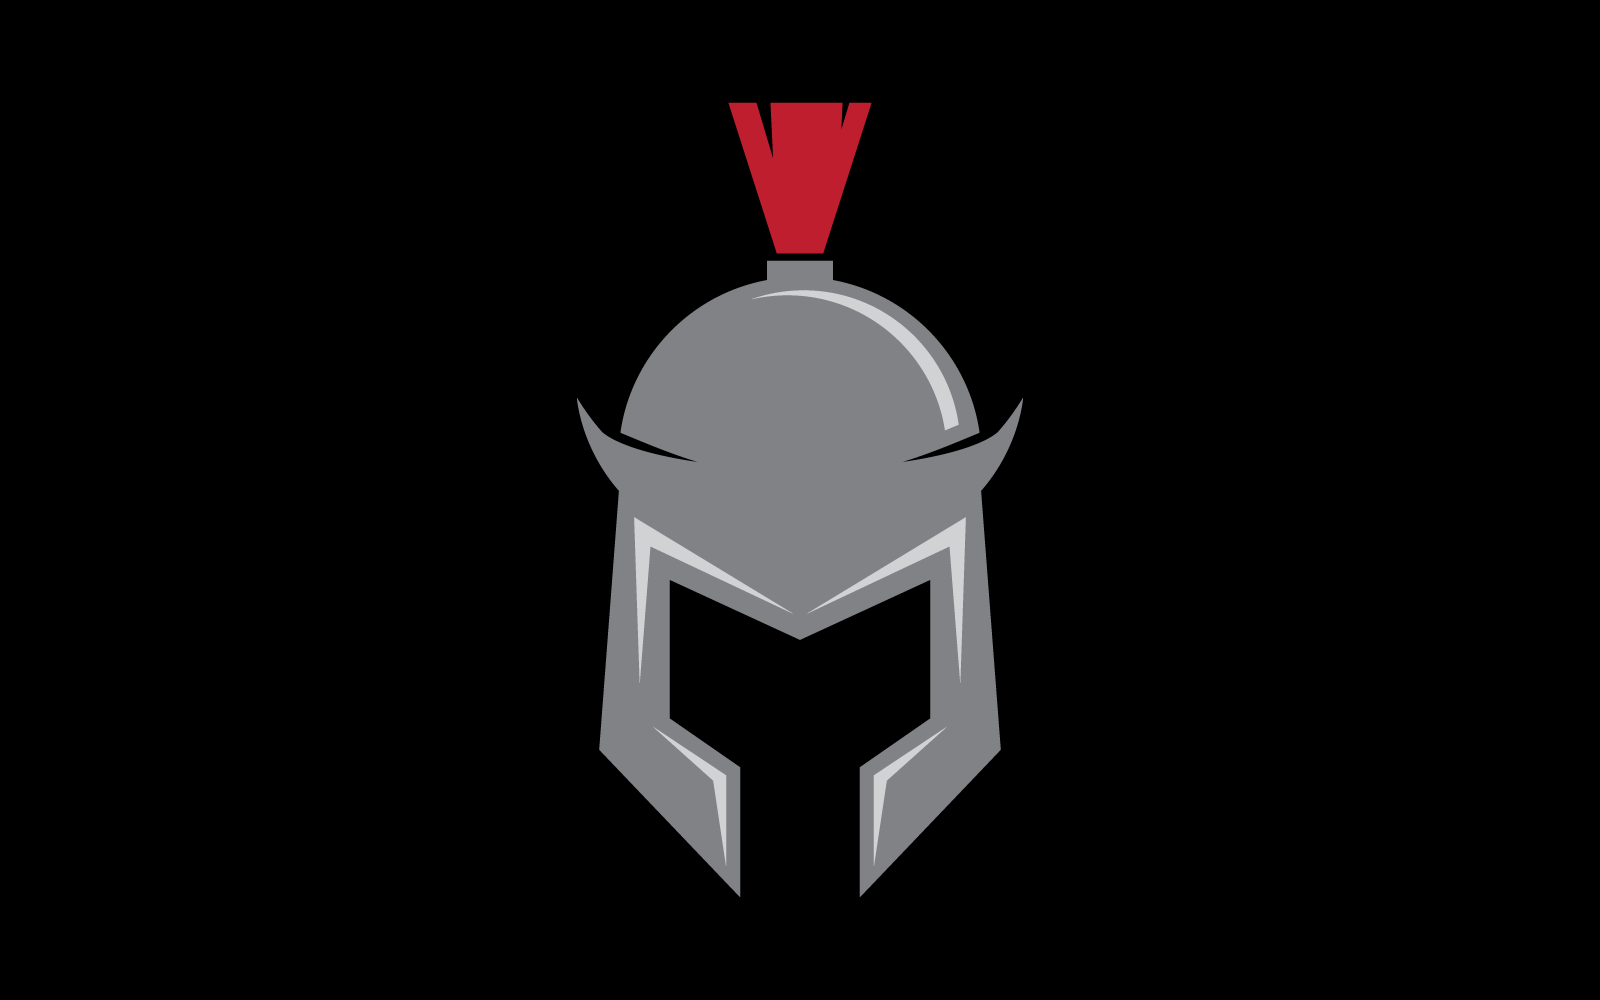 Sword and shield gladiator logo design modern Vector Image